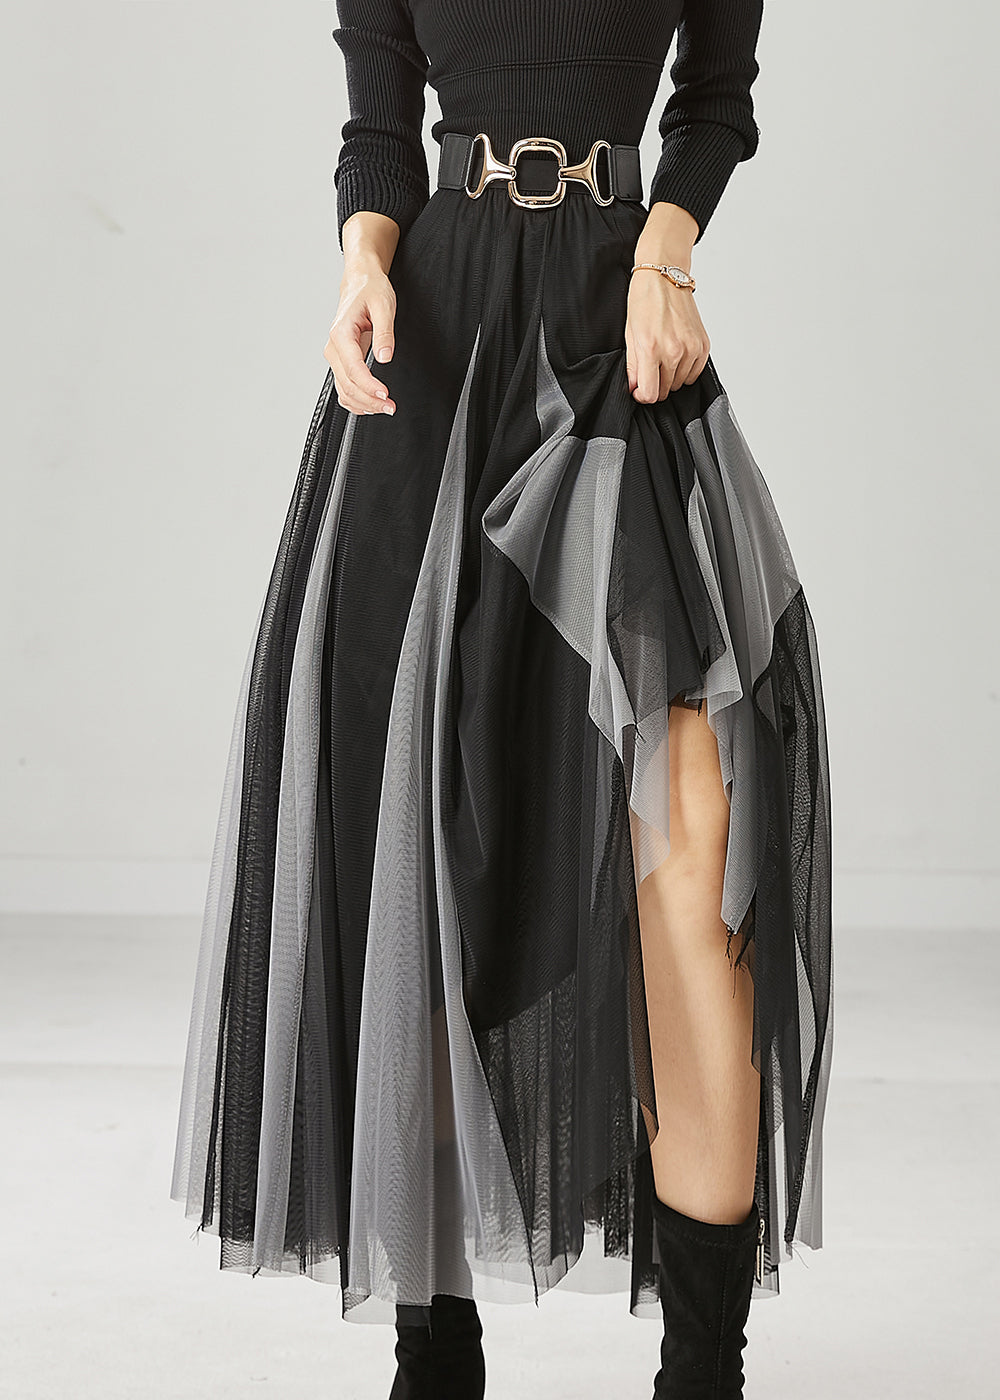 Black Grey Patchwork Tulle Holiday Skirts Wrinkled Spring